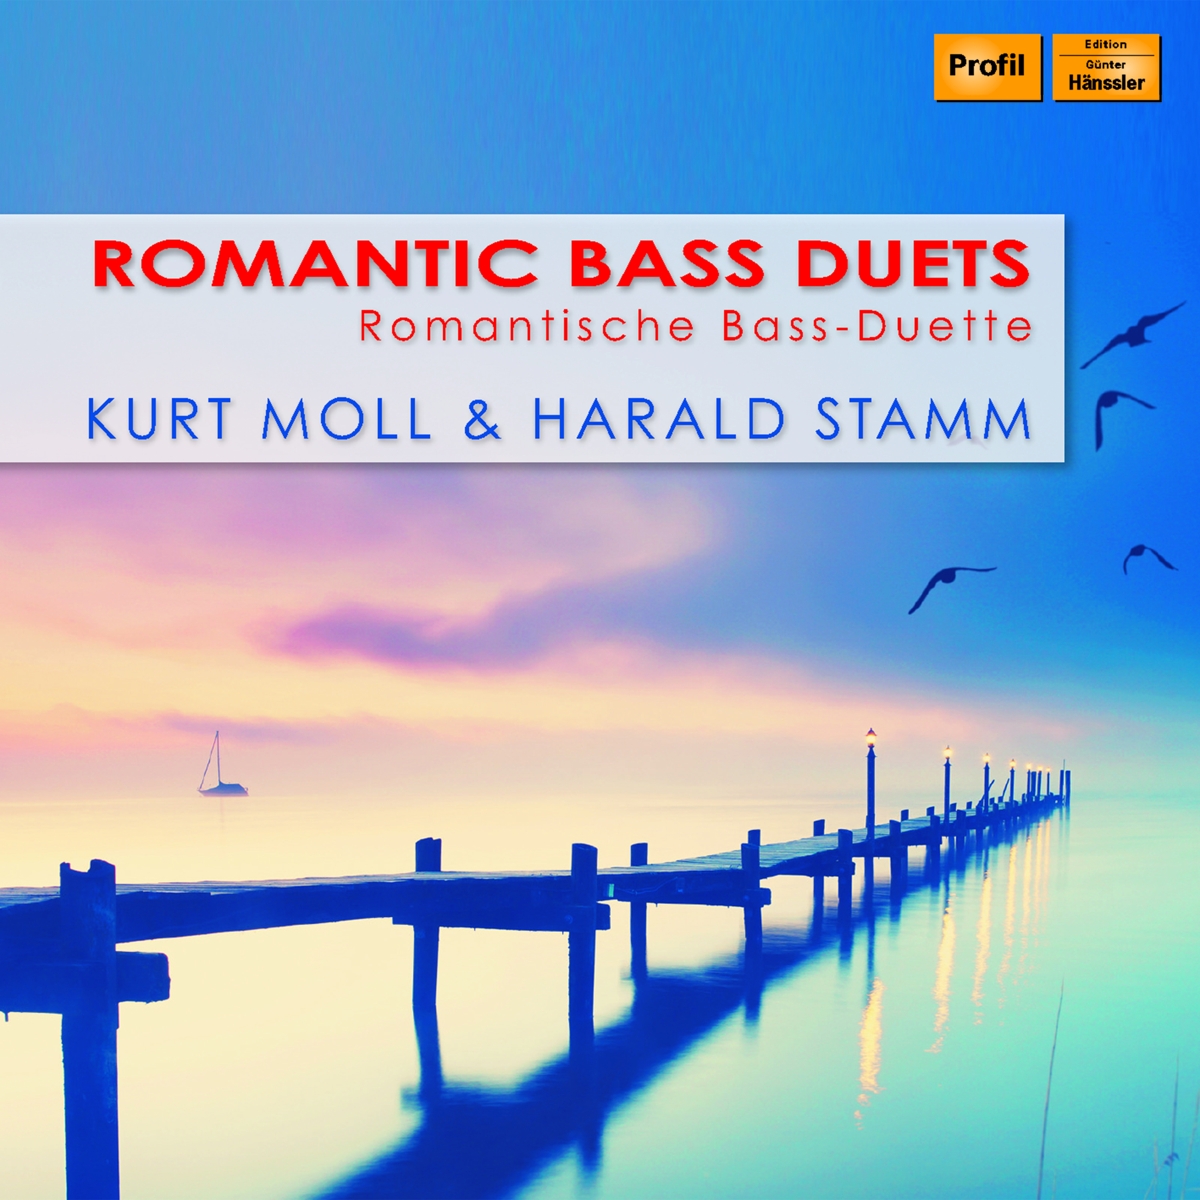 Romantic bass duets